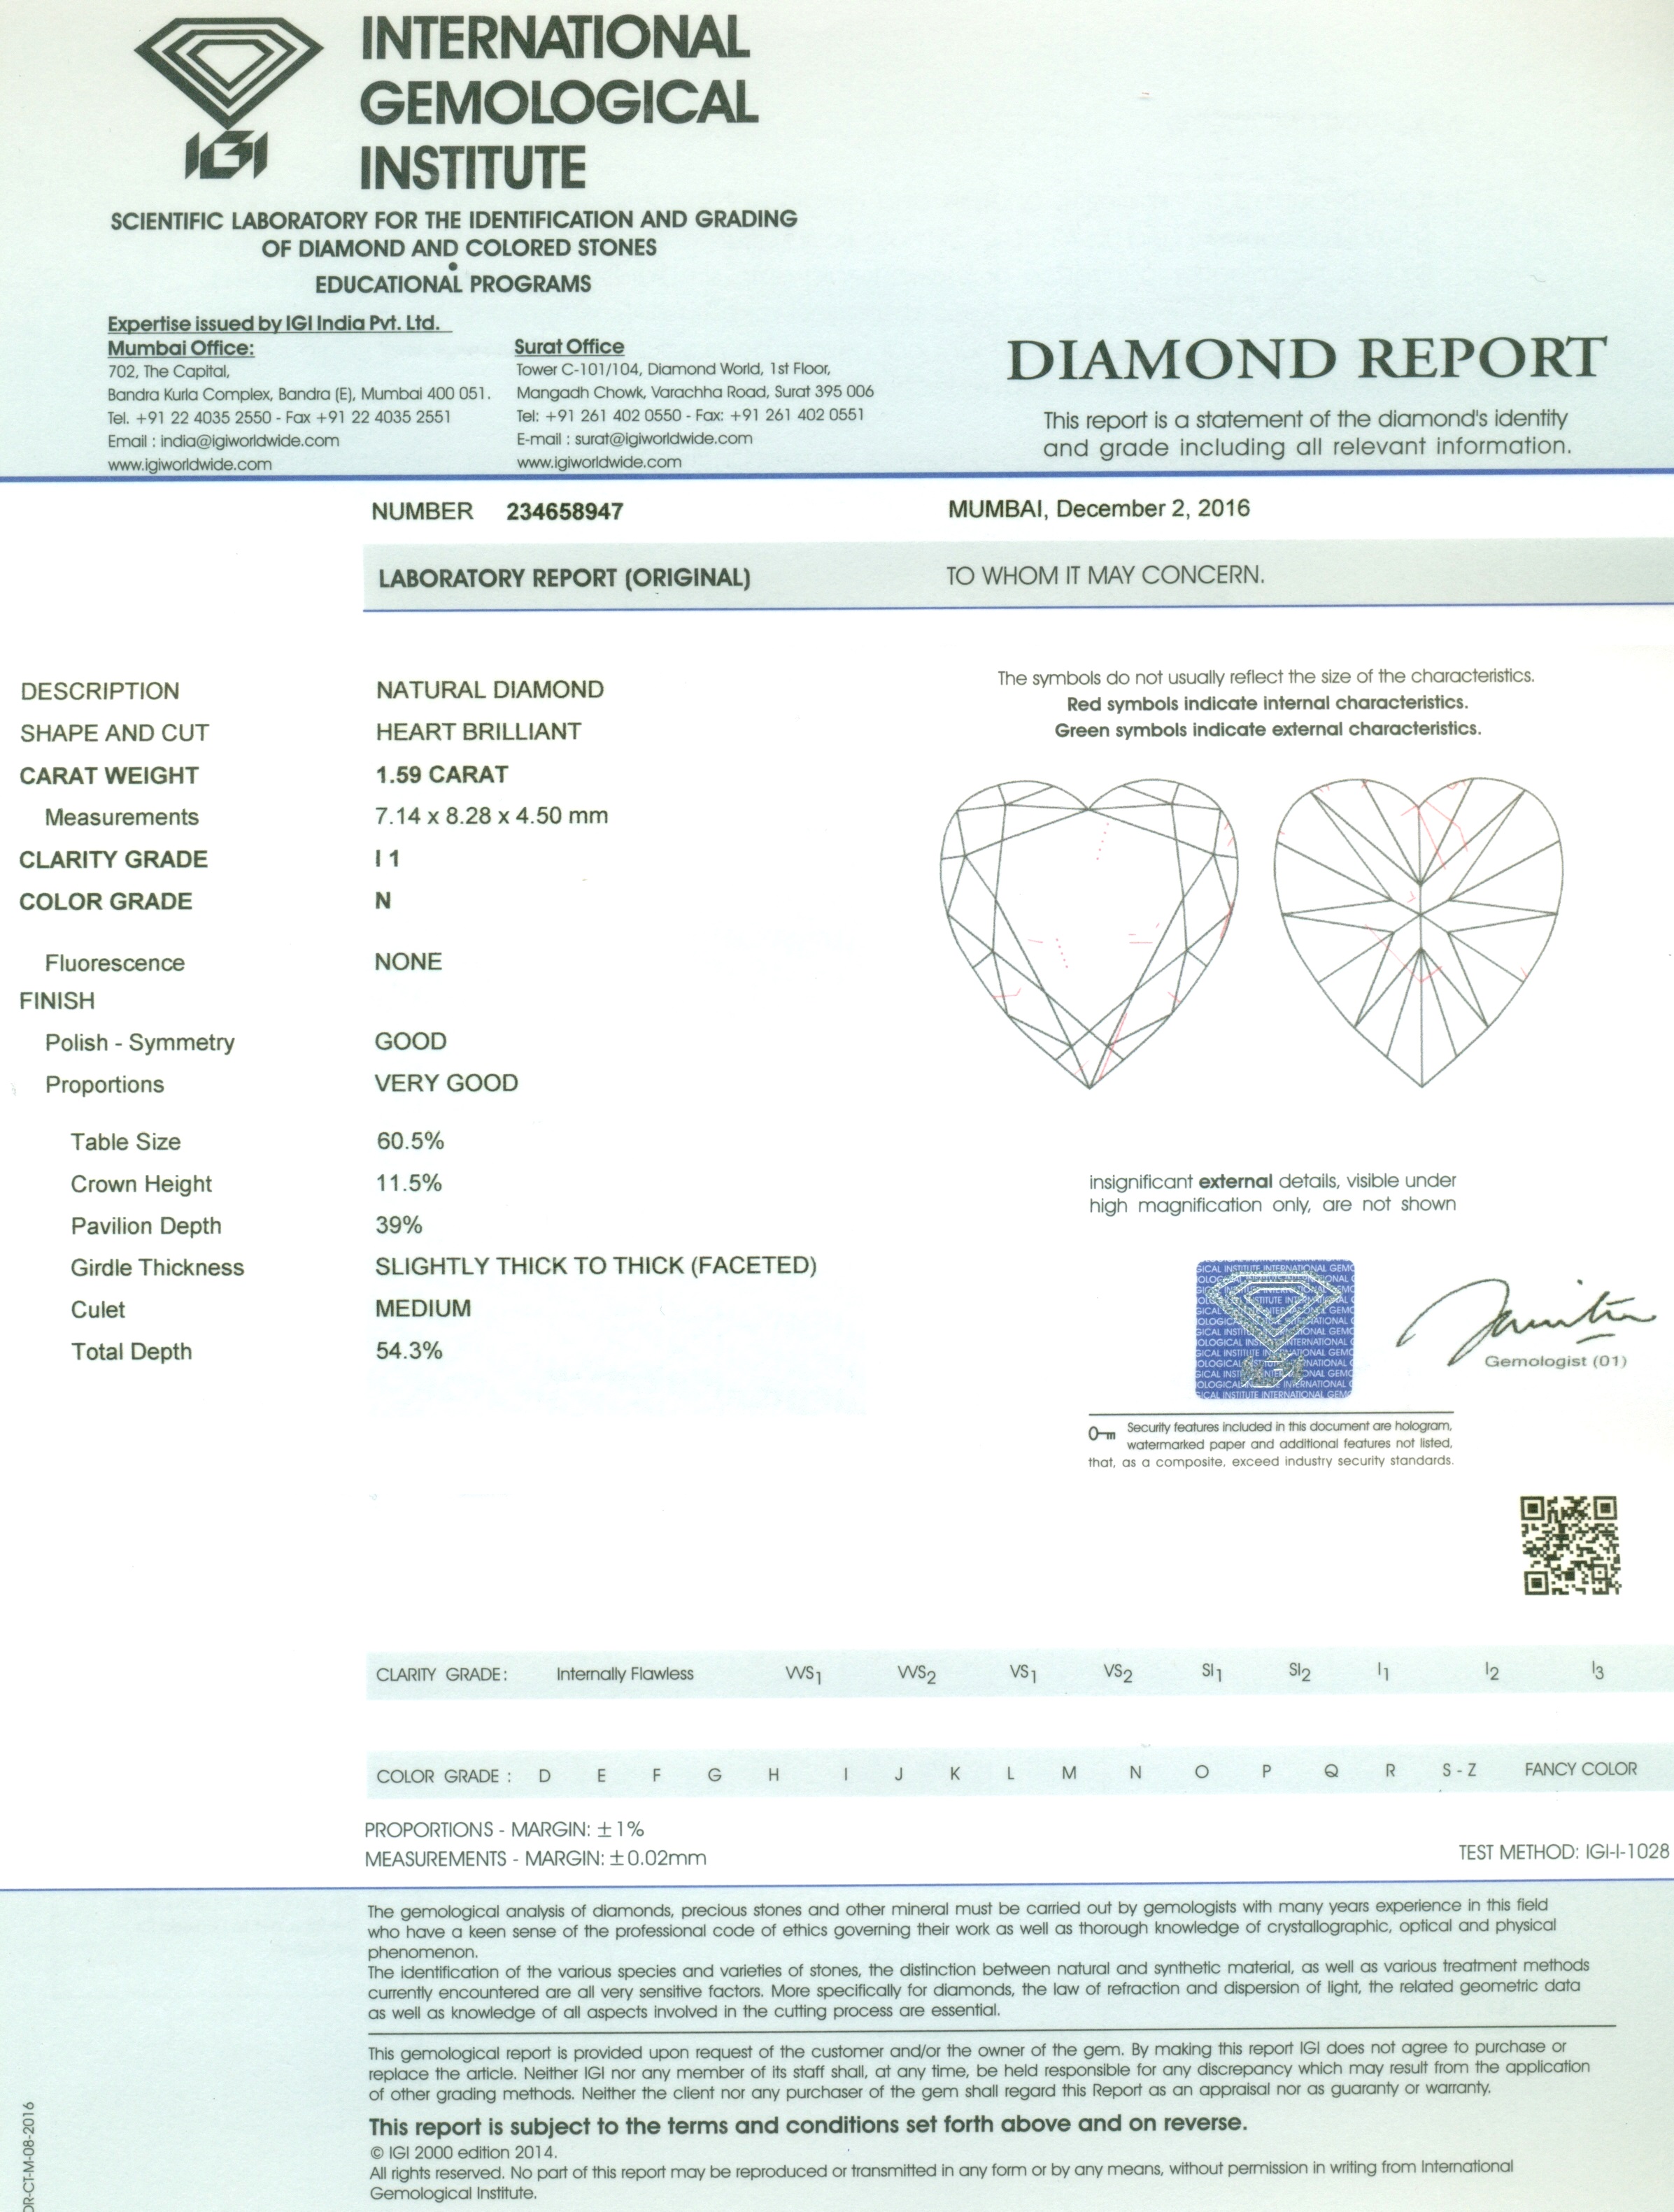 IGI Certified 14 K / 585White Gold Heart Shape Solitaire Diamond Ring - Image 3 of 7